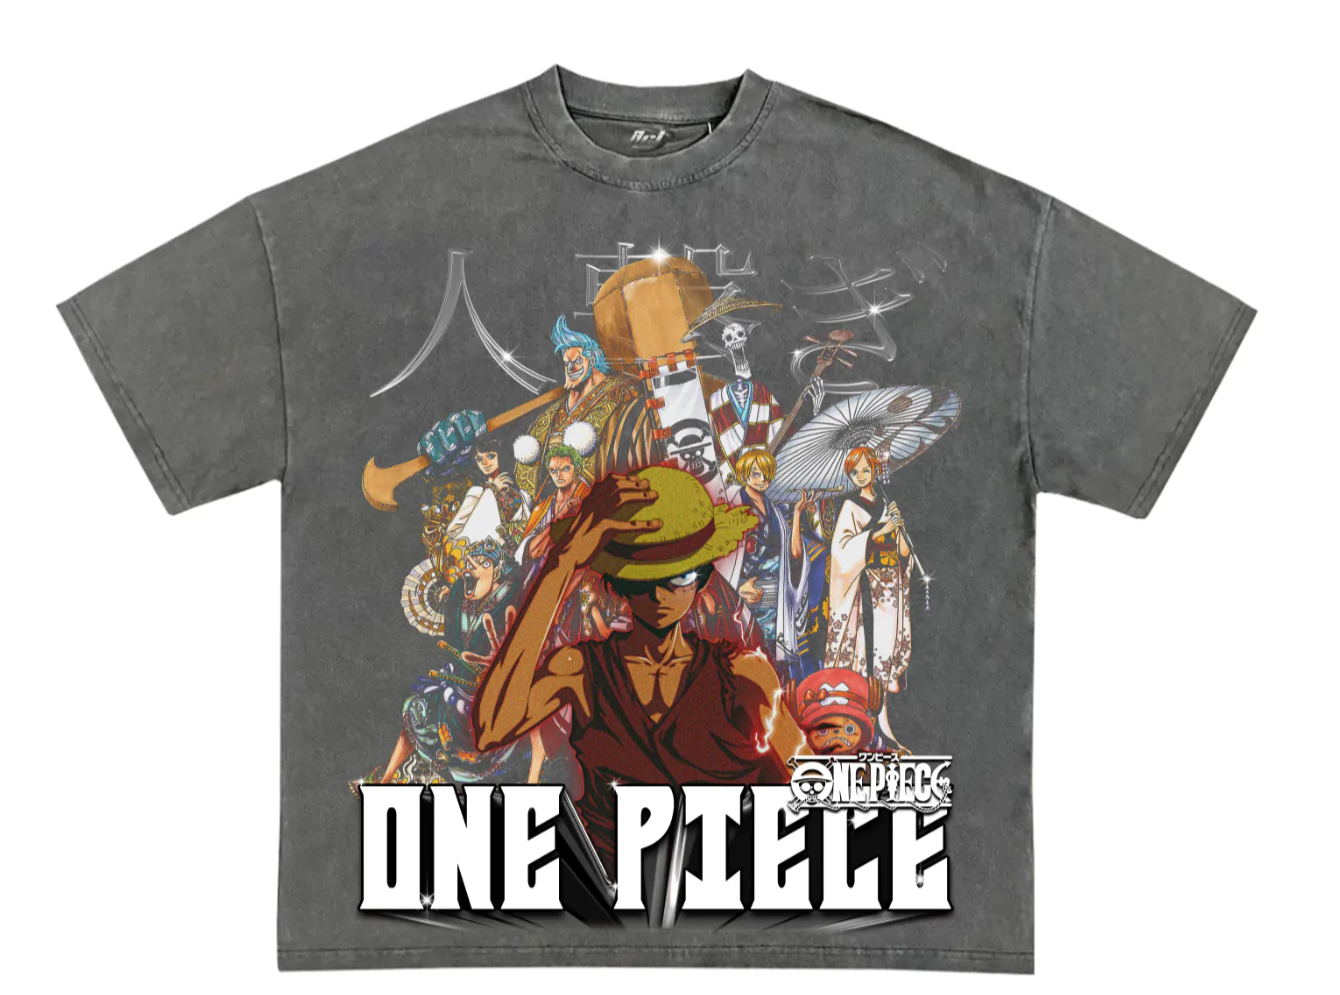 One Piece Man Tee